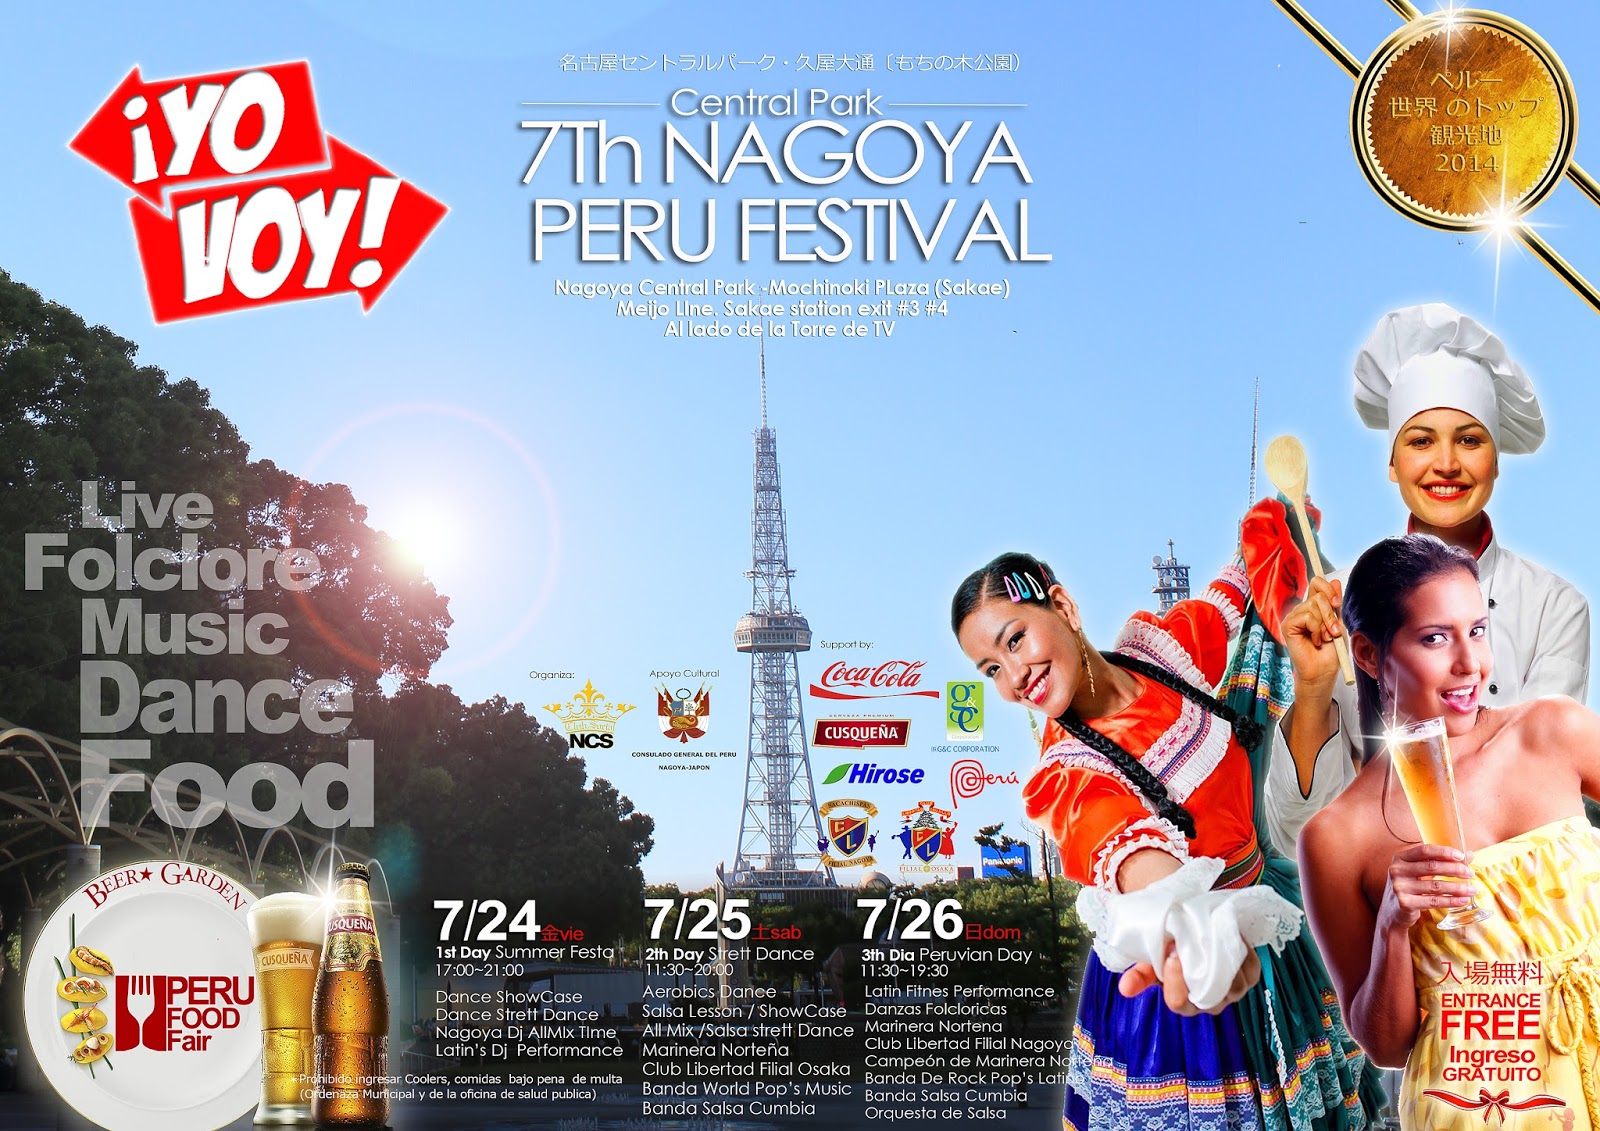 7th Festival Peruano Nagoya 15 第7回 名古屋 ペルー フェスティバル